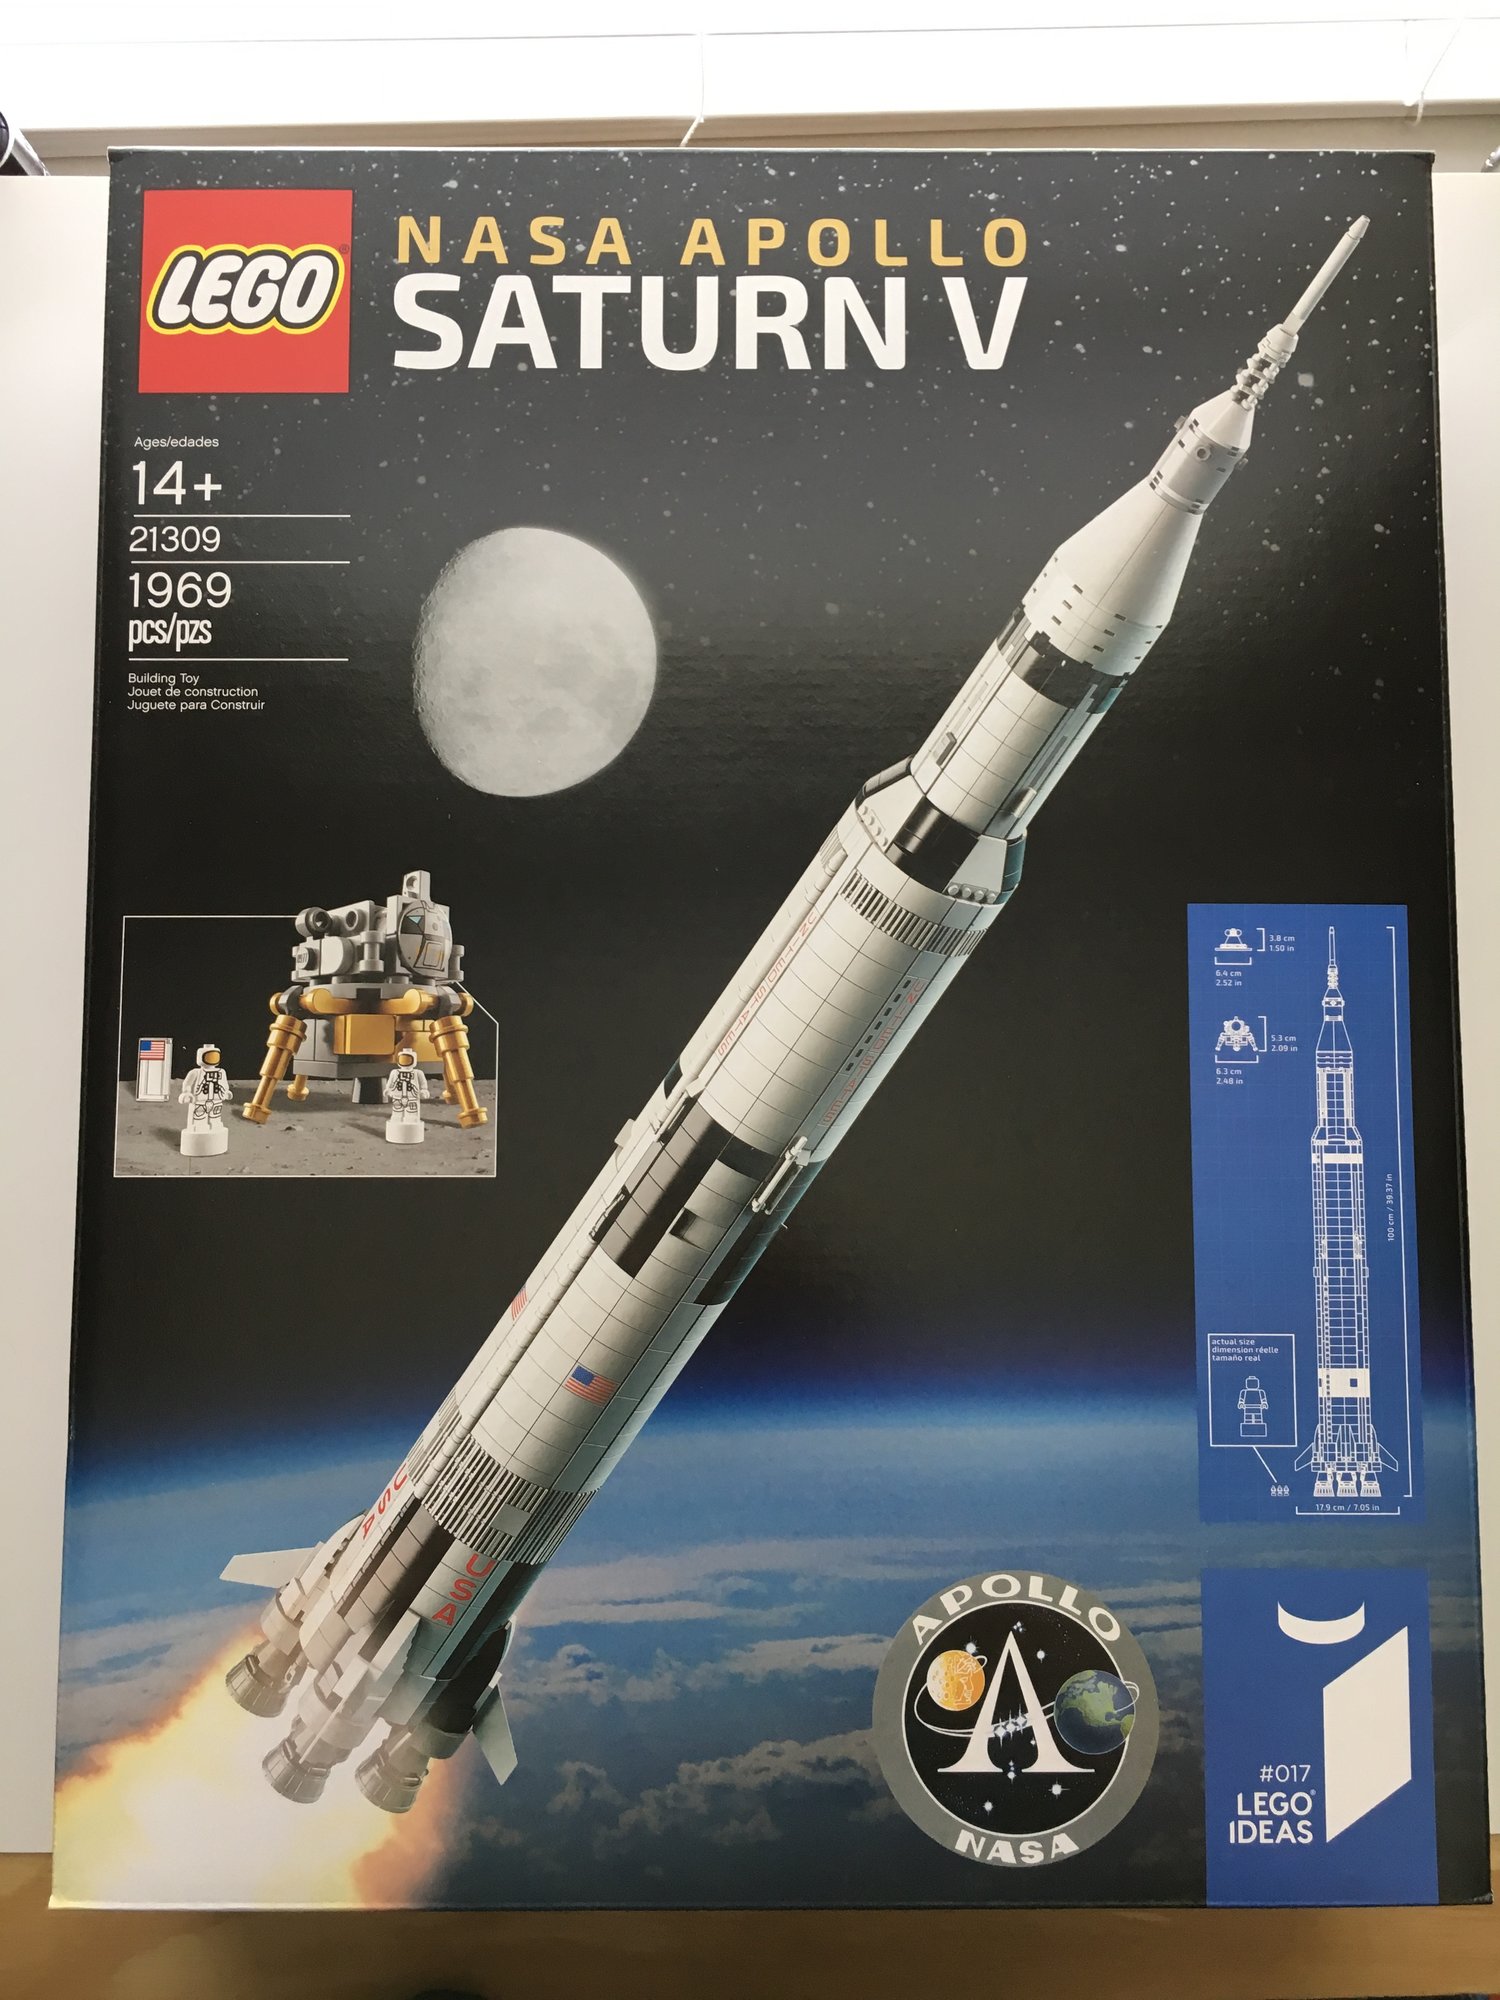 maternal Konsultation indsprøjte Set Review - #21309 - NASA Apollo Saturn V - LEGO Ideas — Bricks for Bricks